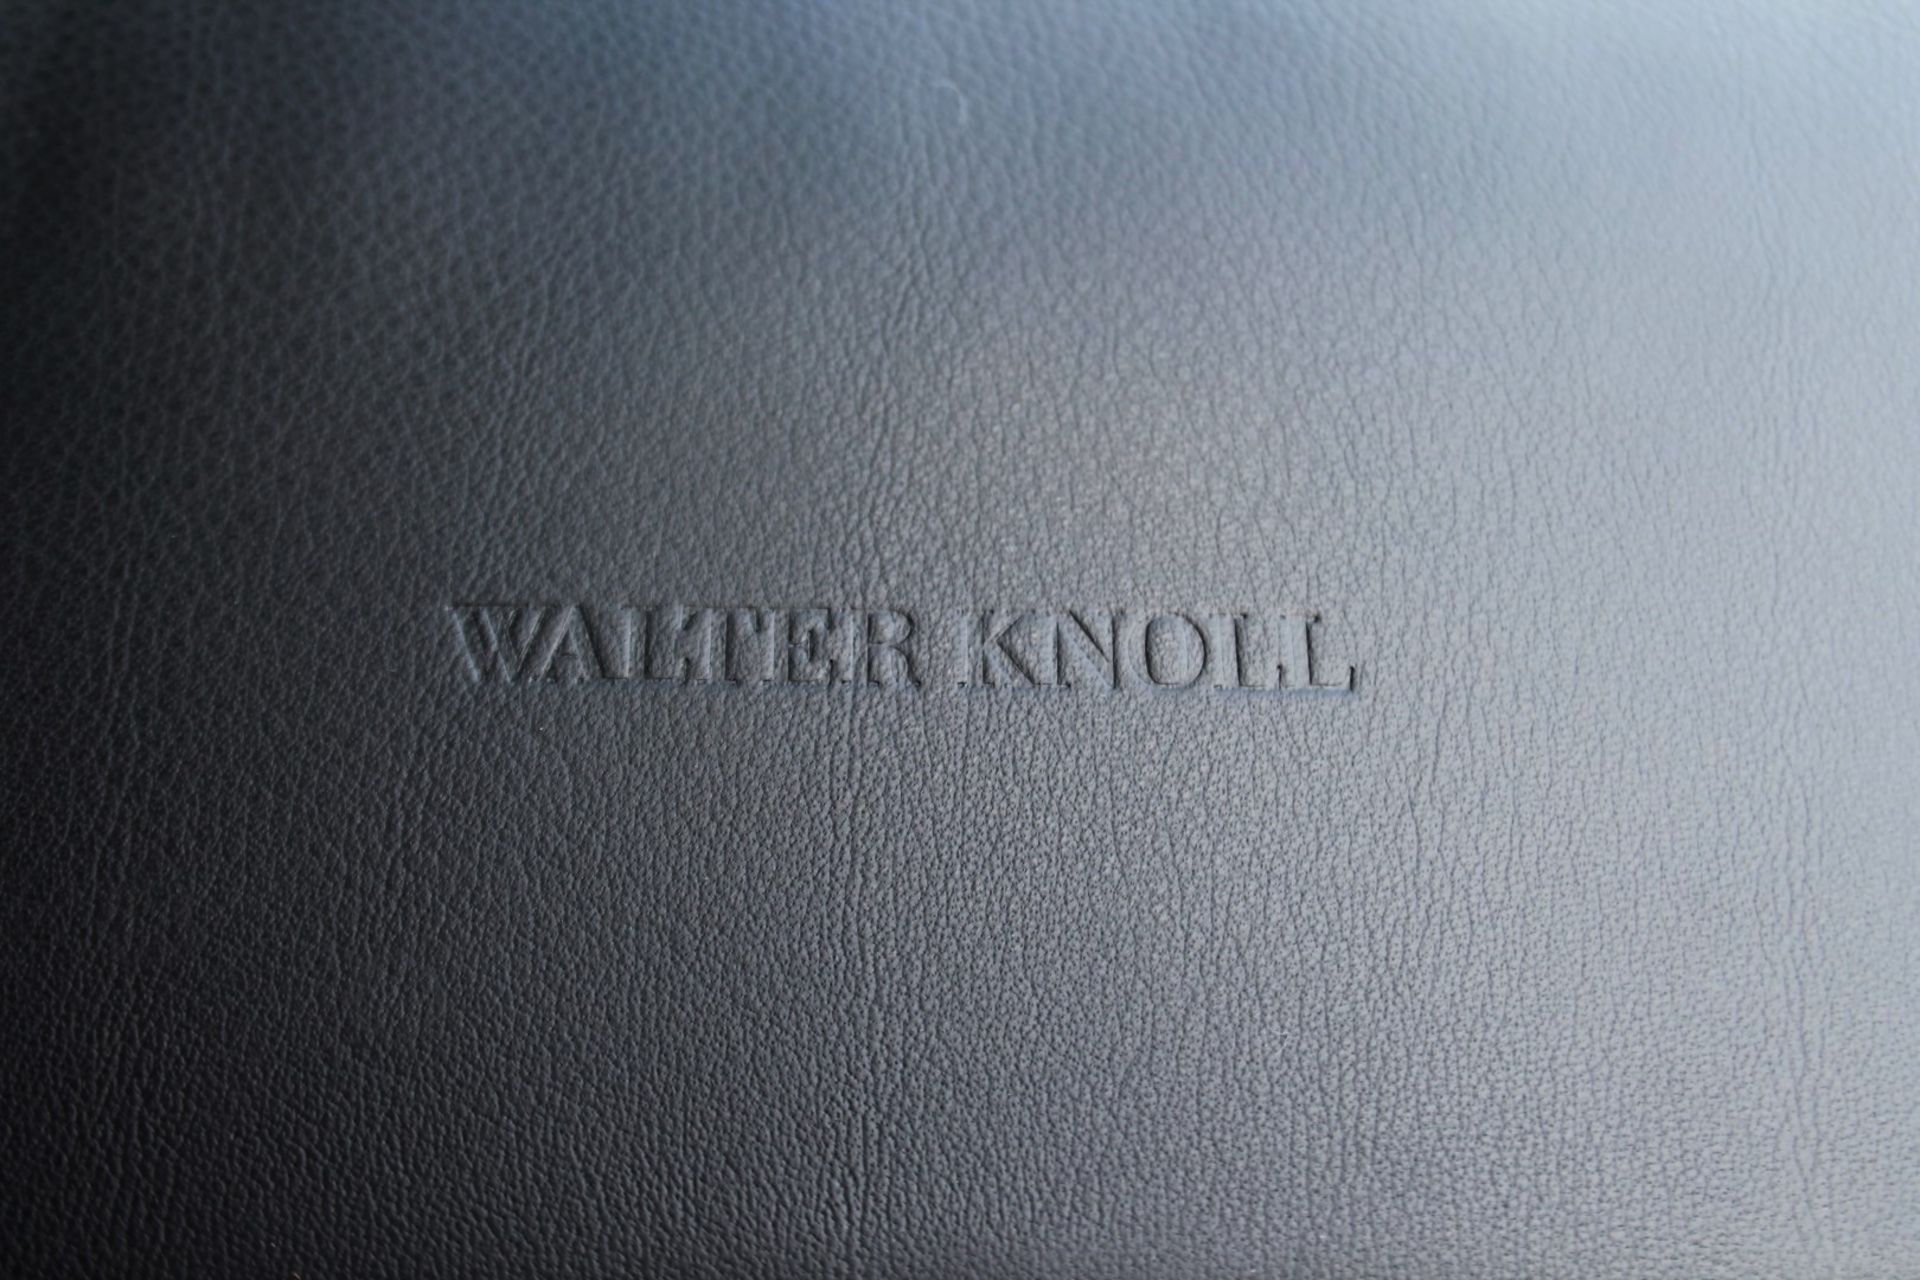 1 x WALTER KNOLL Designer Corner Sofa, Upholstered In A Soft Black Leather - Image 11 of 11